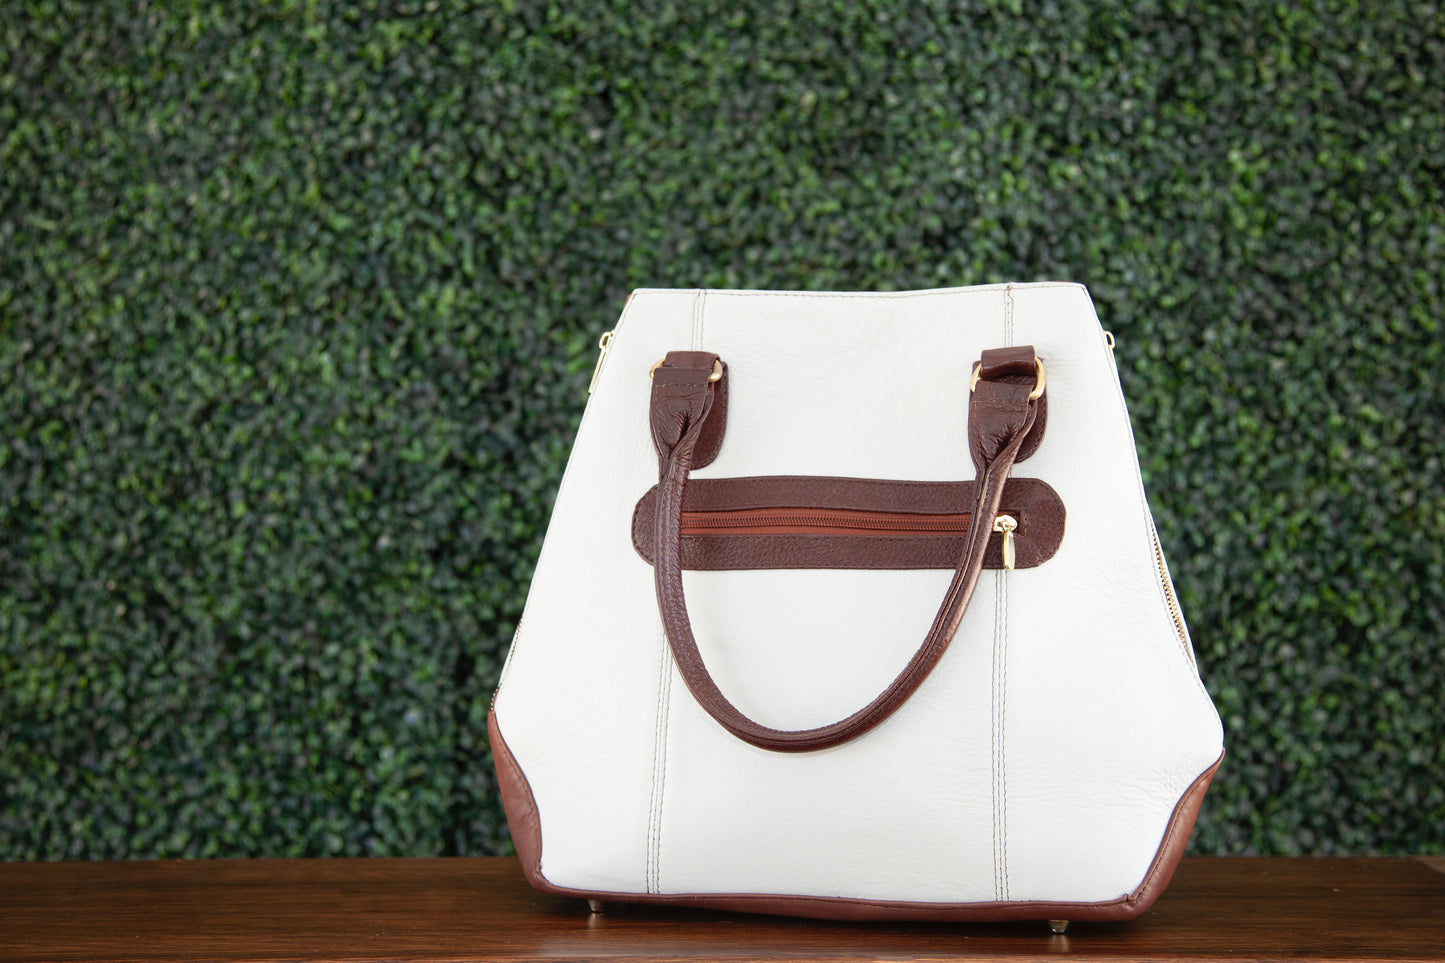 The Anna white/brown Vibora Handbag with side zippers